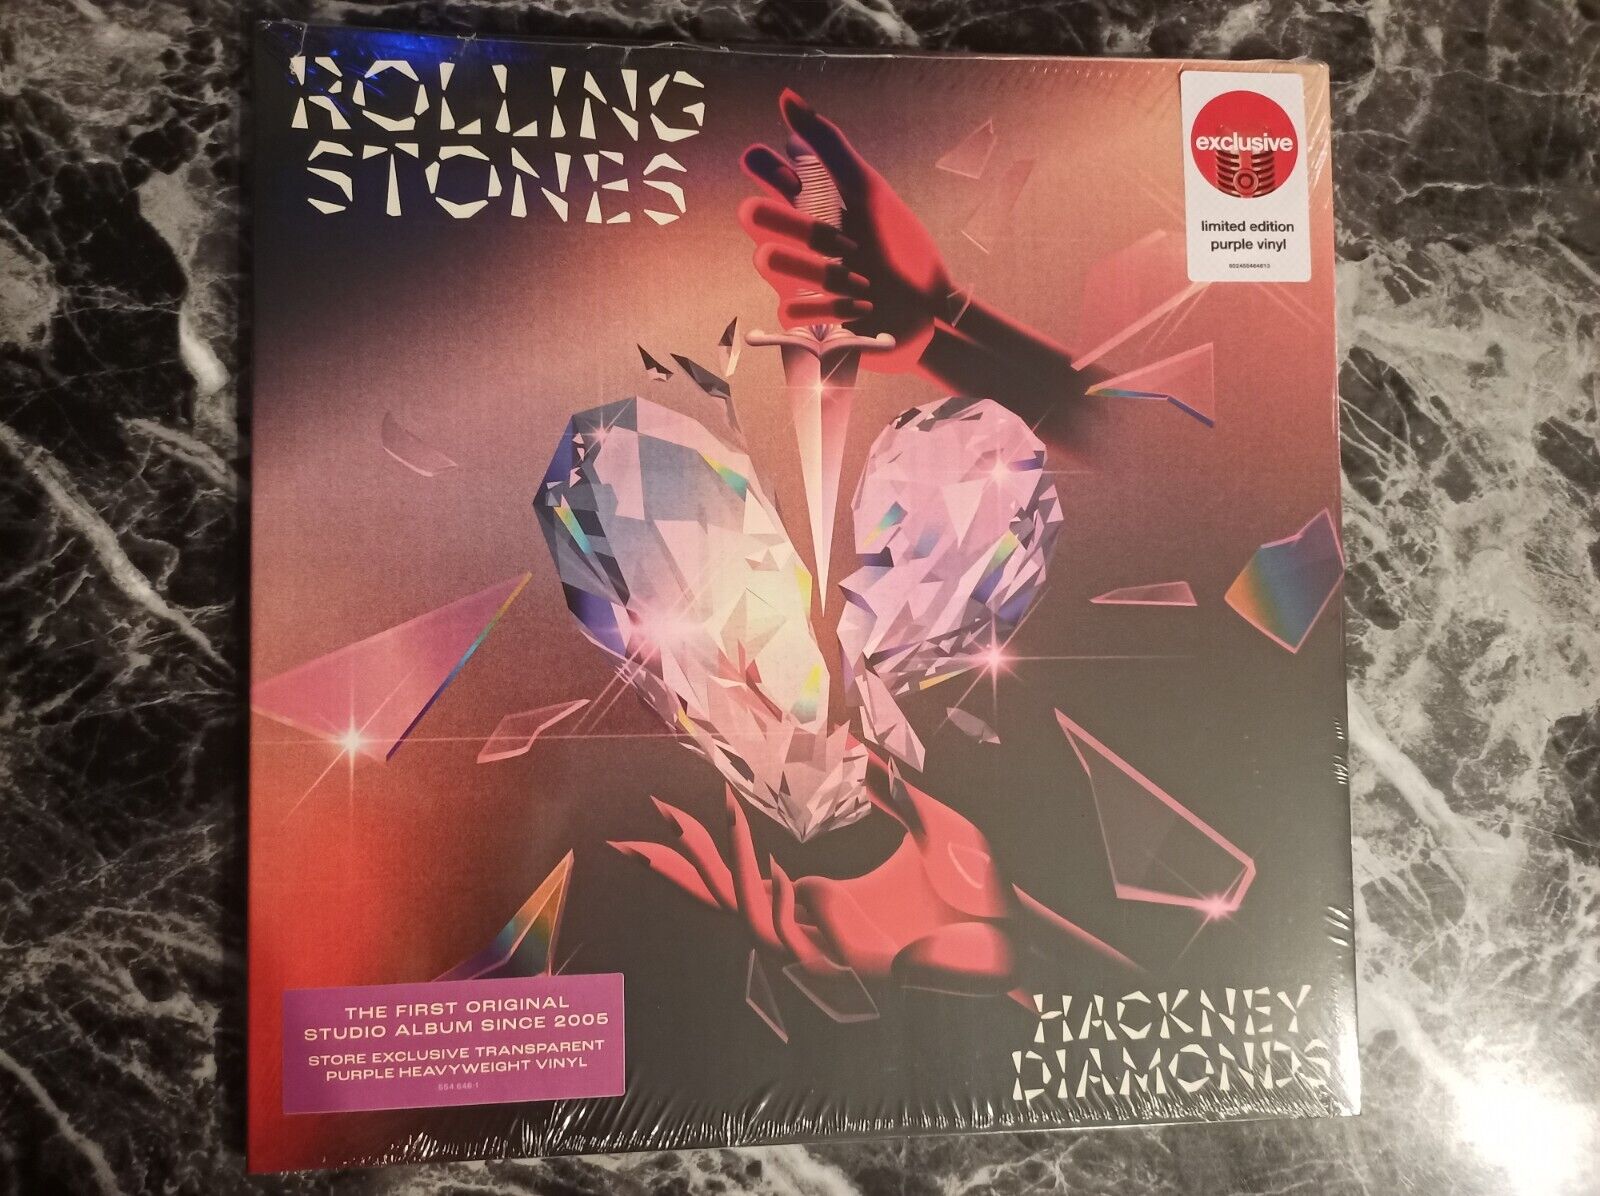 The Rolling Stones Hackney Diamonds Vinyl Record LP New Sealed Purple